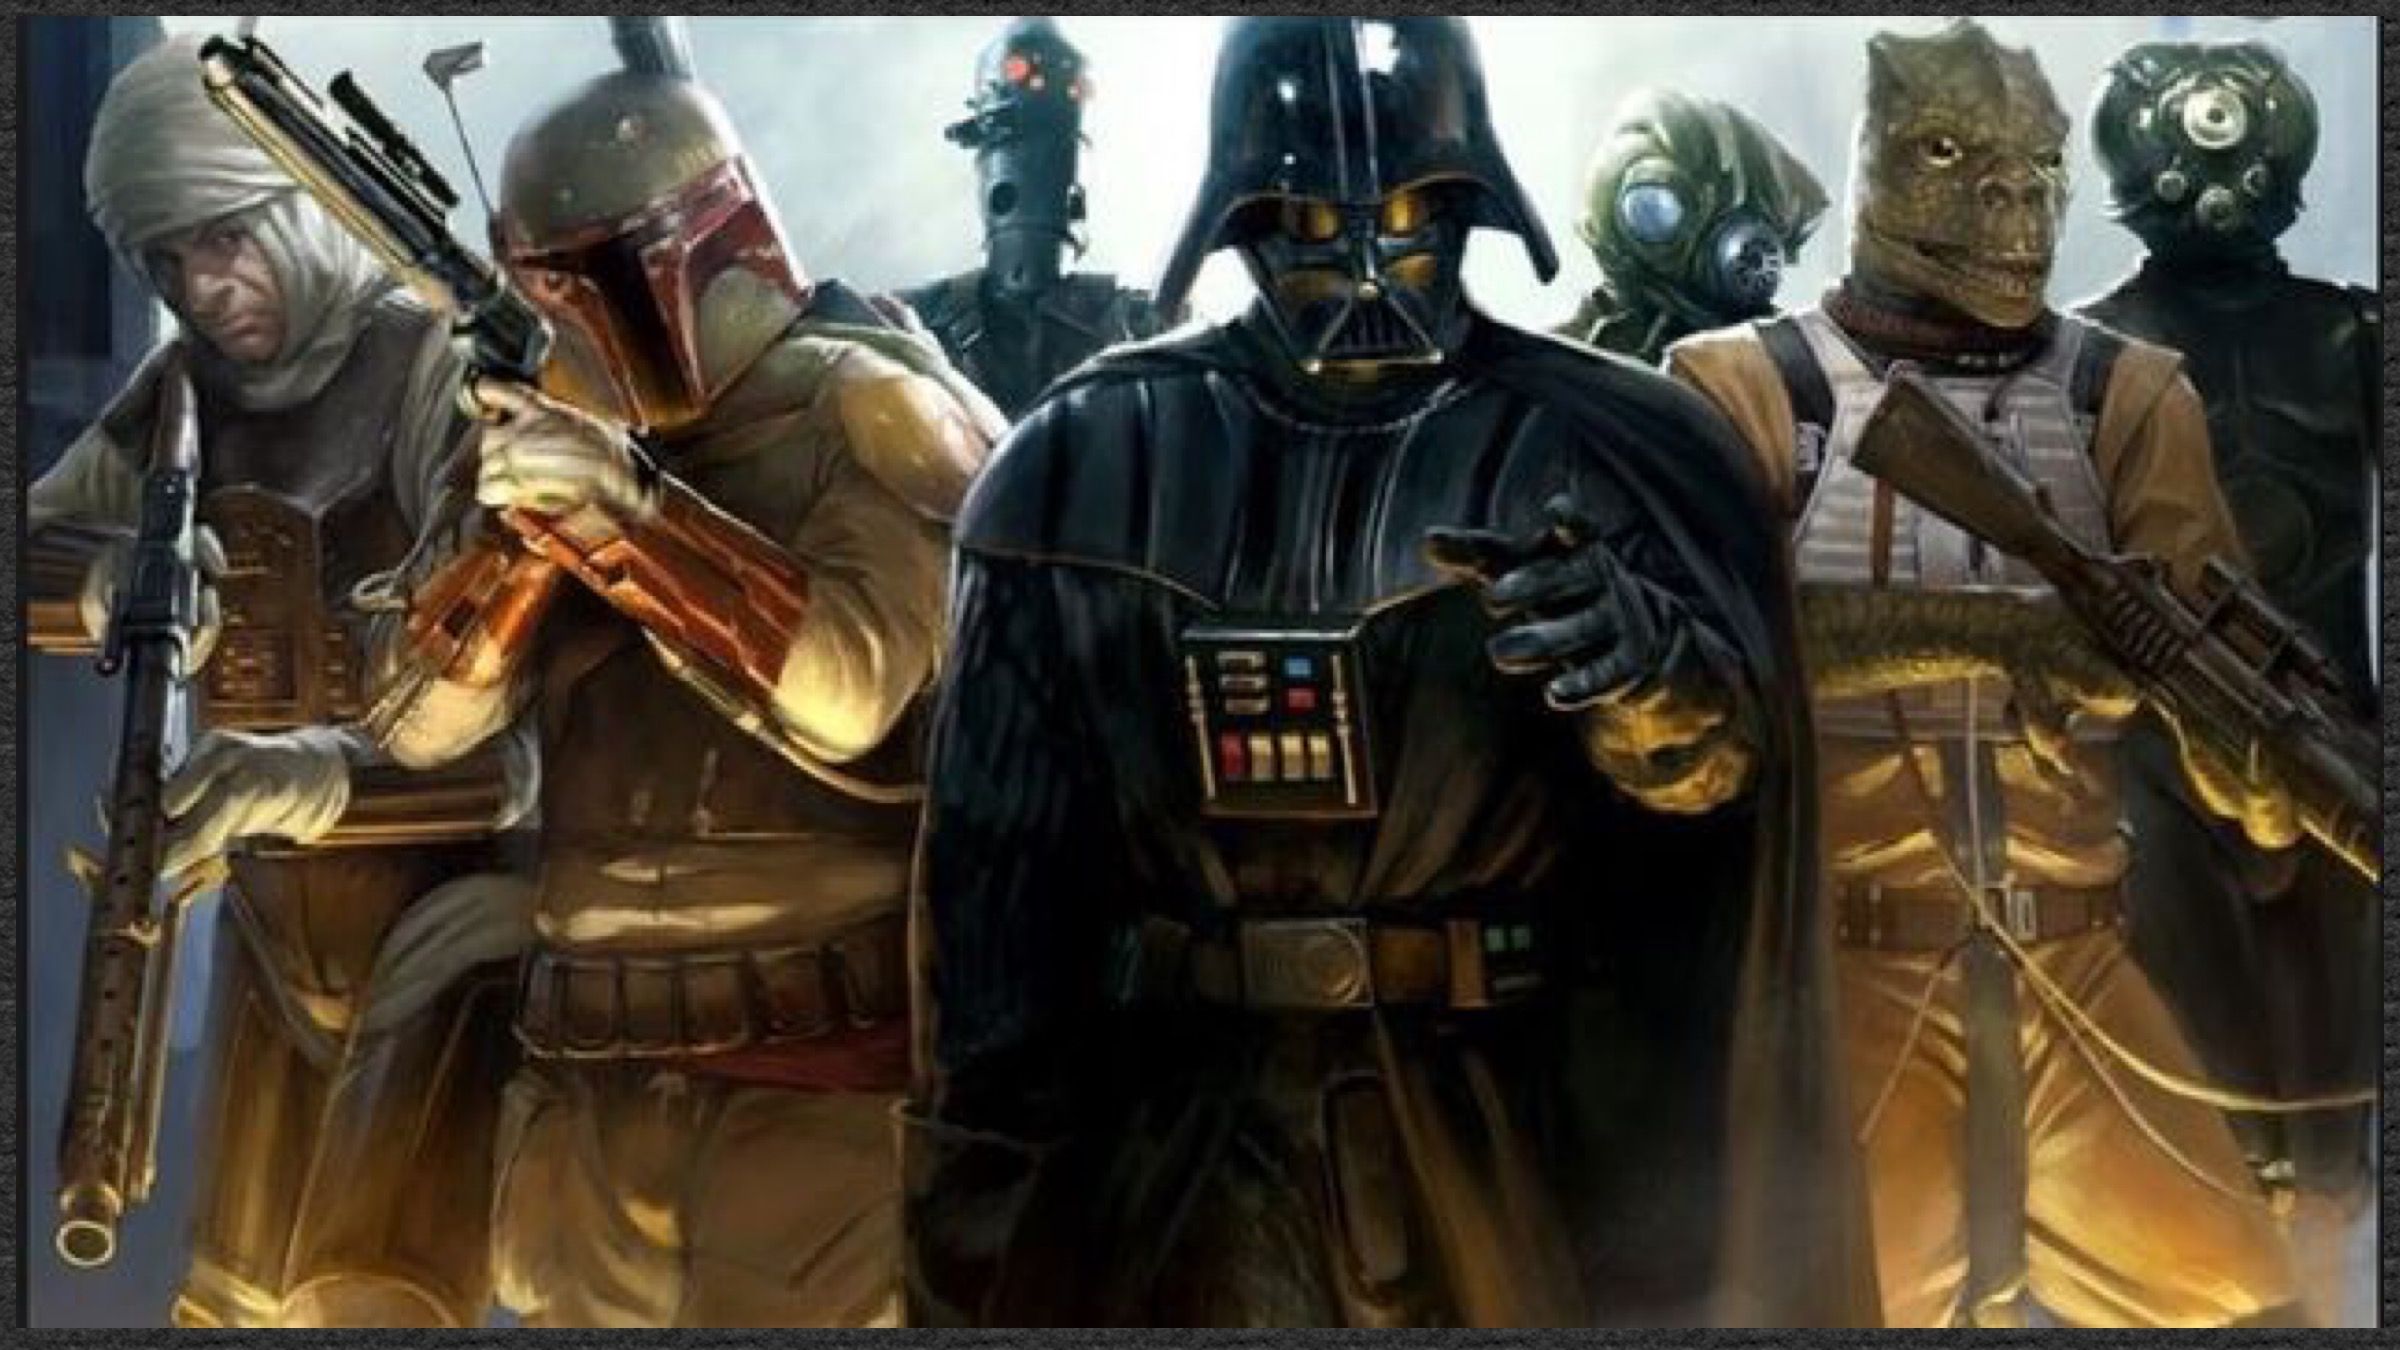 Star Wars Darth Vader and The Bounty Hunters. Star wars illustration, Star wars poster, Star wars wallpaper